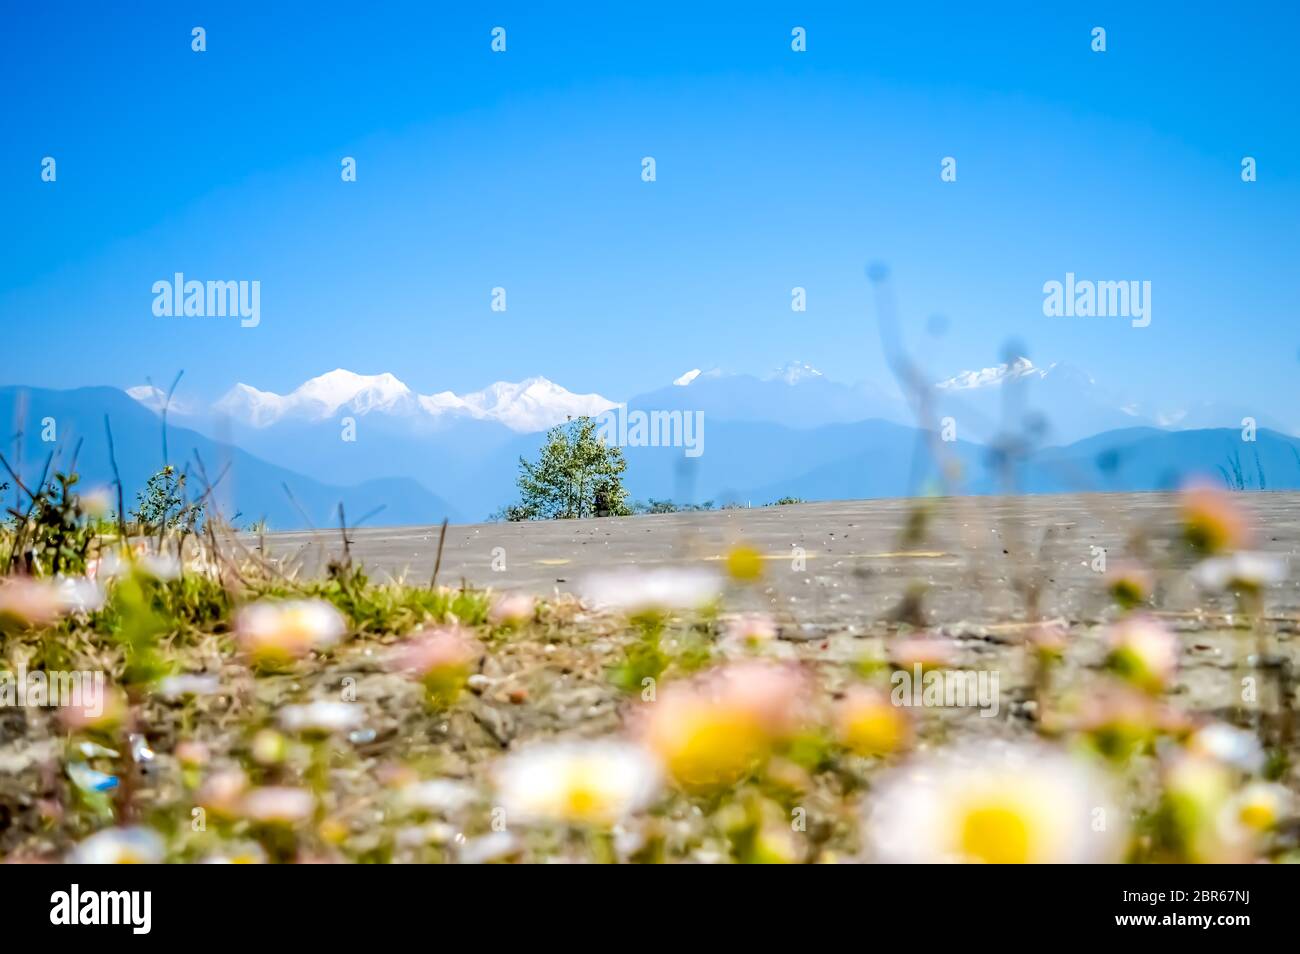 Kanchenjunga Mountain Range from Pelling Helipad Top. Scenic view of mountains, Kanchenjunga Region, Himalayas, Nepal. Shoot through blurry flowers on Stock Photo